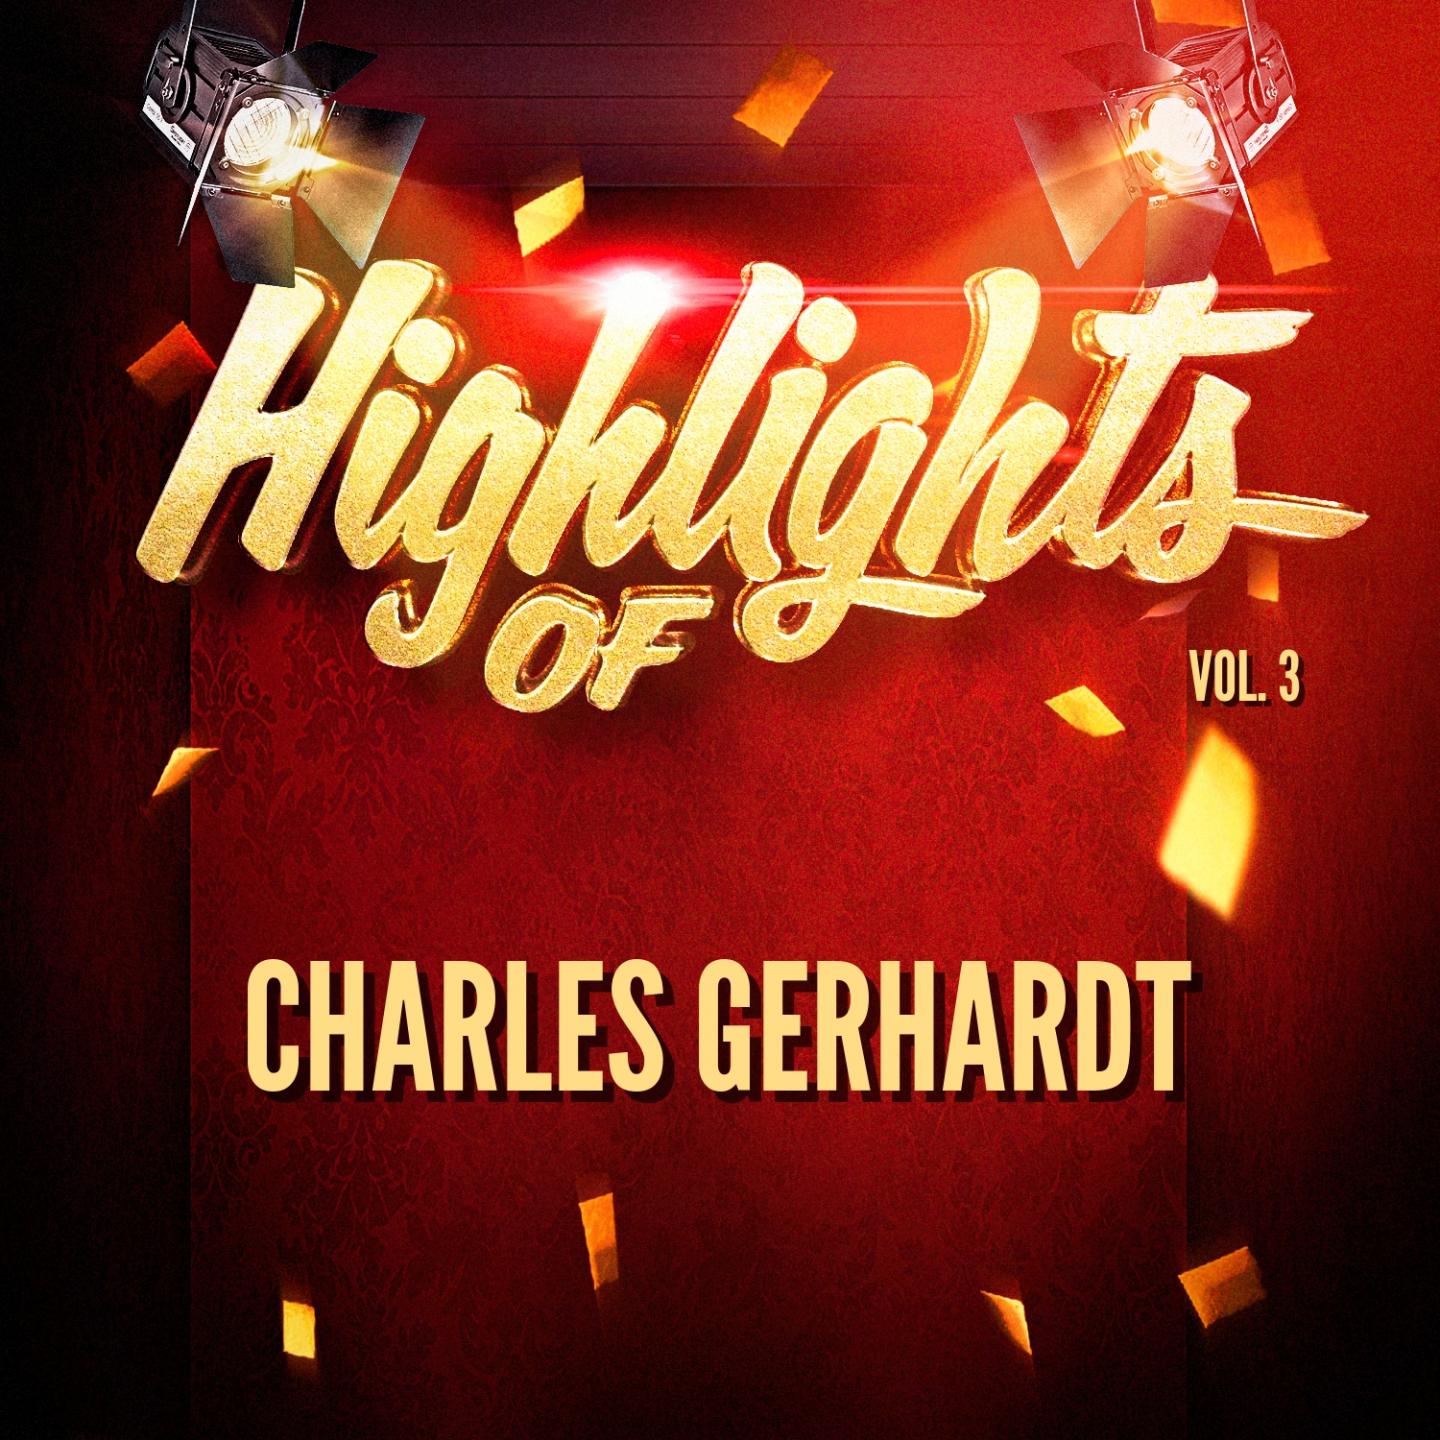 Highlights of Charles Gerhardt, Vol. 3